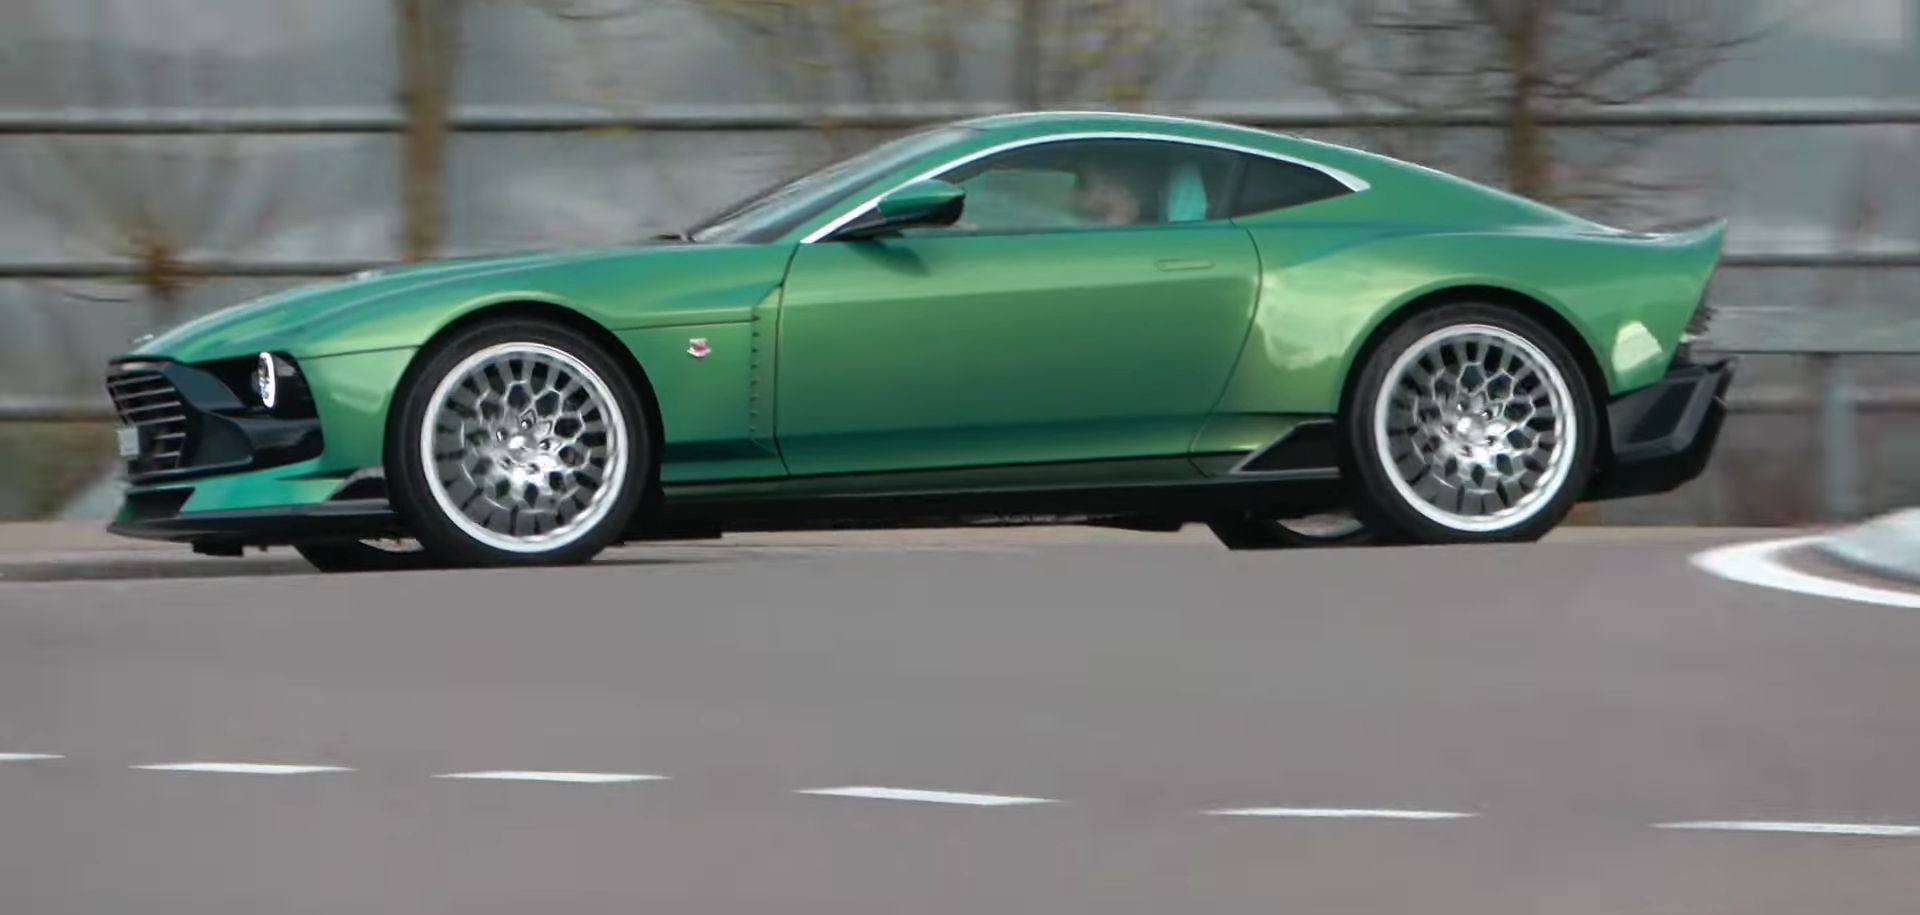 Rare V12 Manual Cars: Aston Martin Valour and More